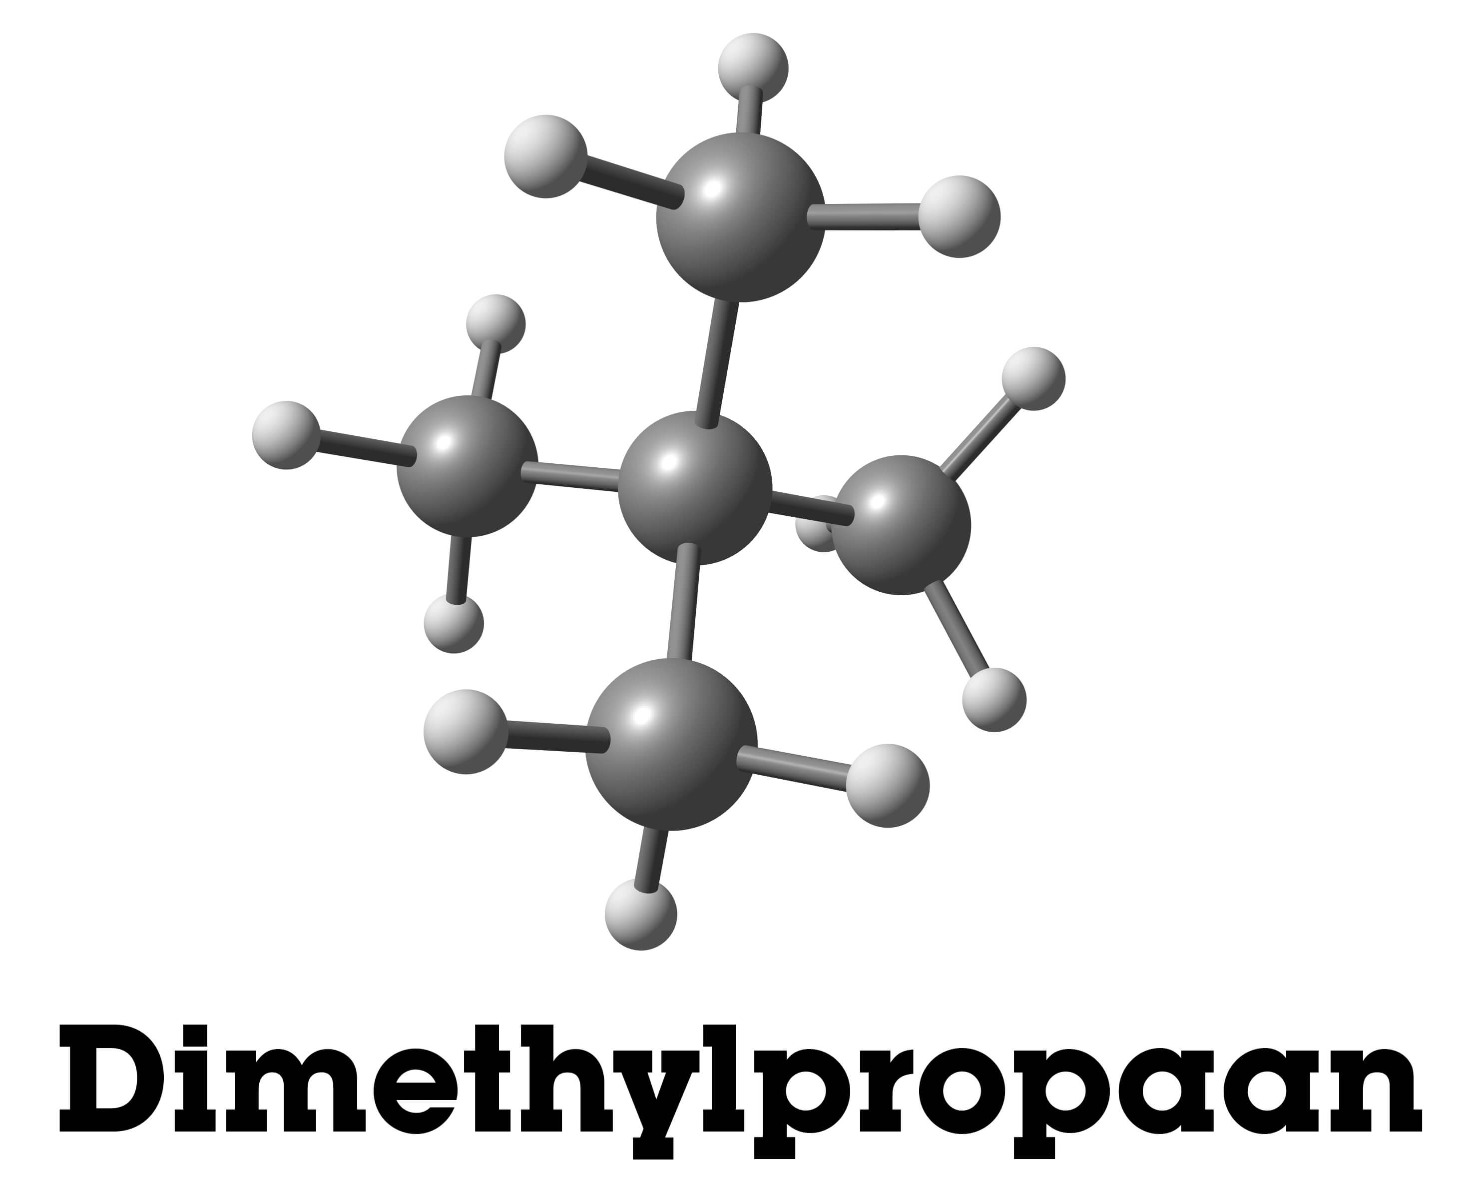 Dimethylpropaan